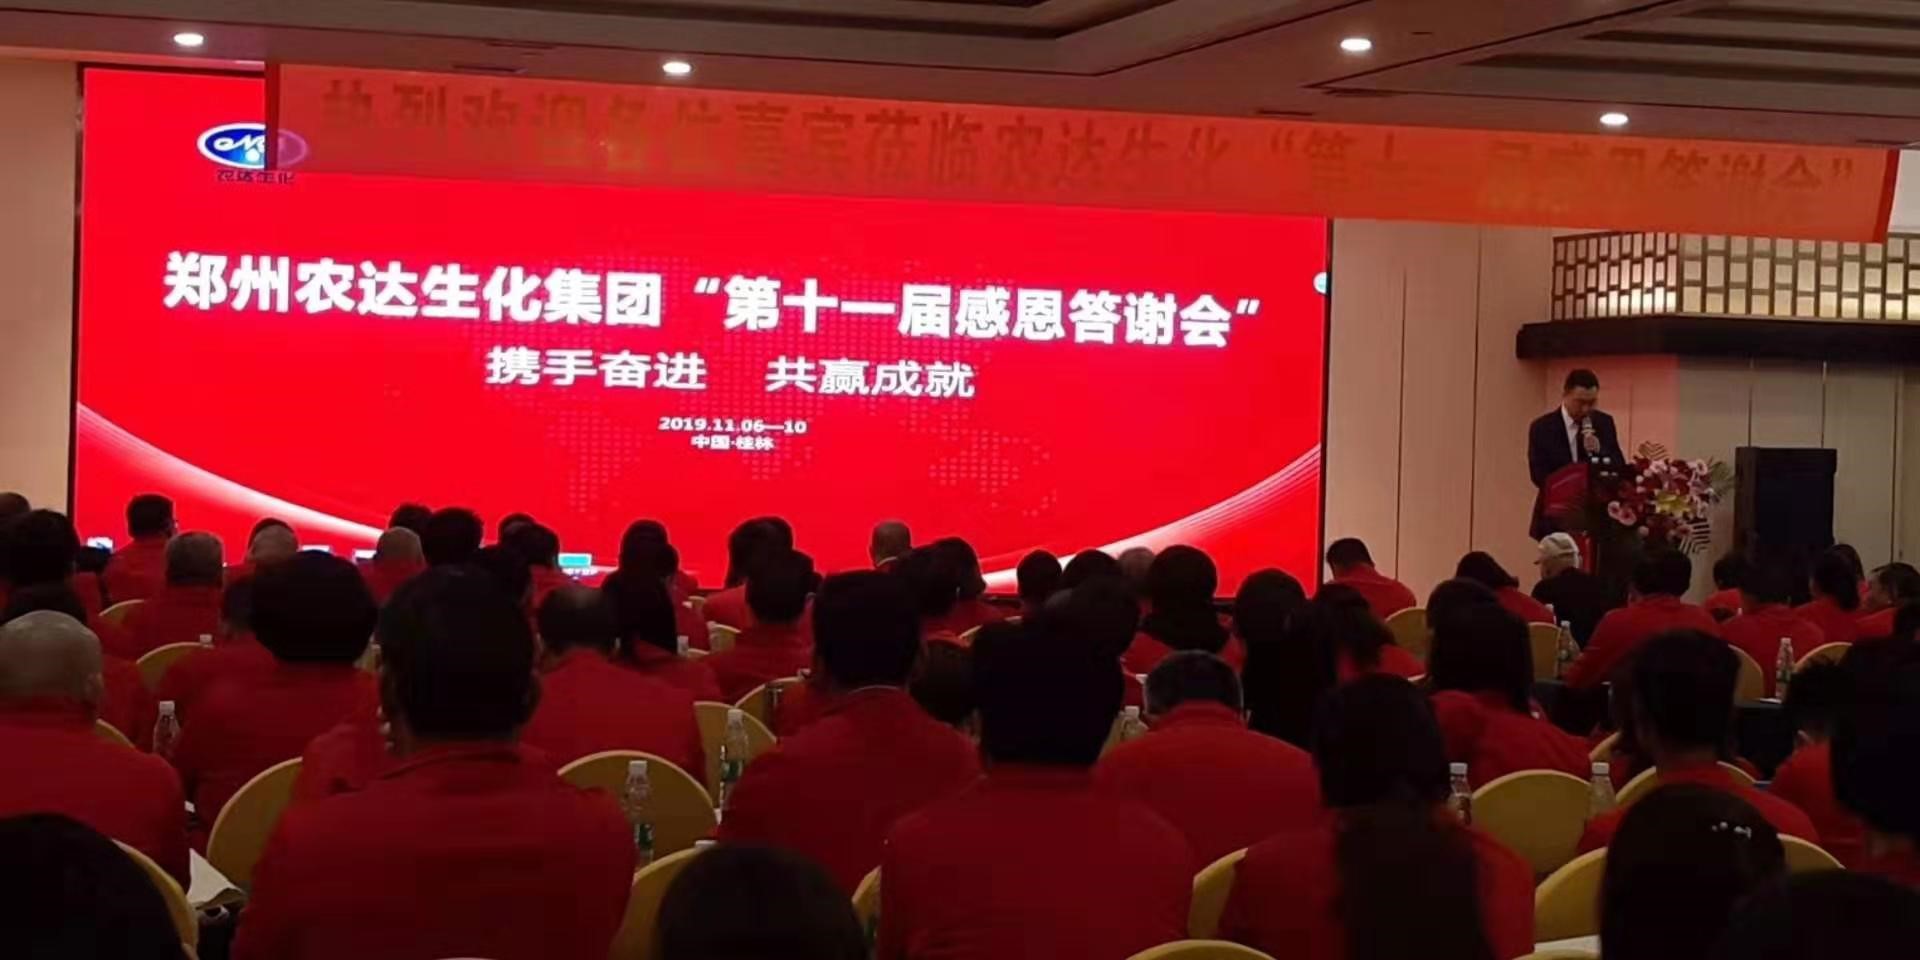 The 11th Return Banquet of Zhengzhou Nongda biochemical group was successfully held(图3)